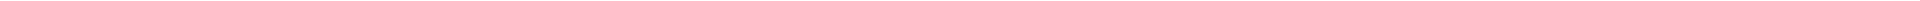 Виниры на зубы – цены в Казахстане Алматы, Астане, Усть-Каменогорске, Атырау, Уральск, Кокшетау в Казахстане, фото 21